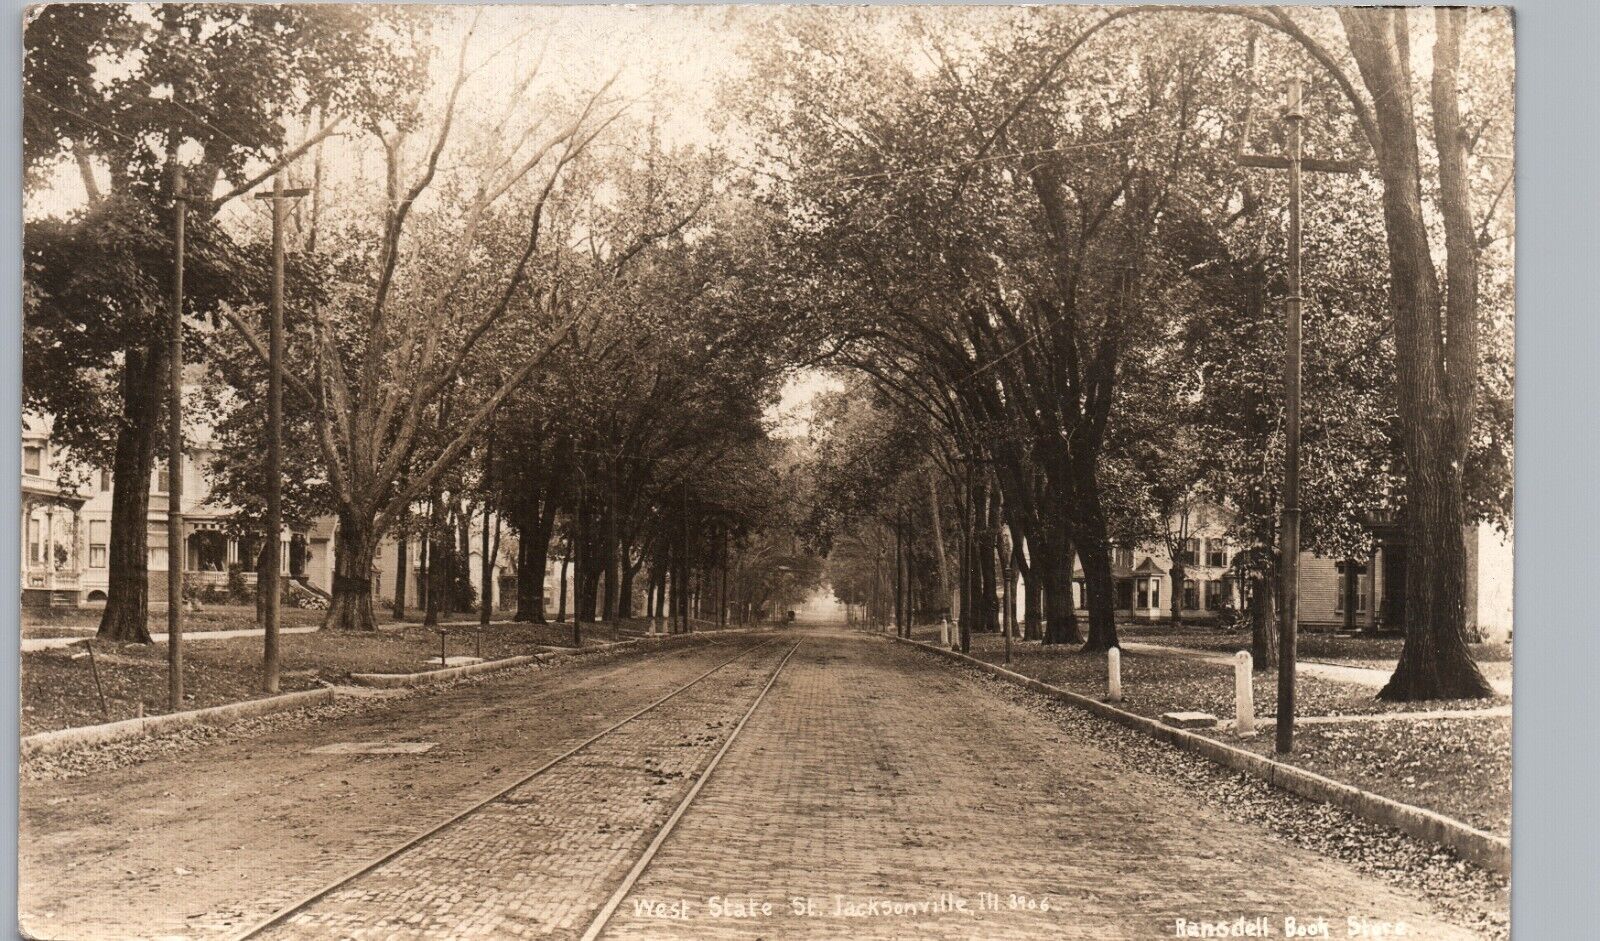 WEST STATE STREET c1910 jacksonville il real photo postcard rppc illinois road